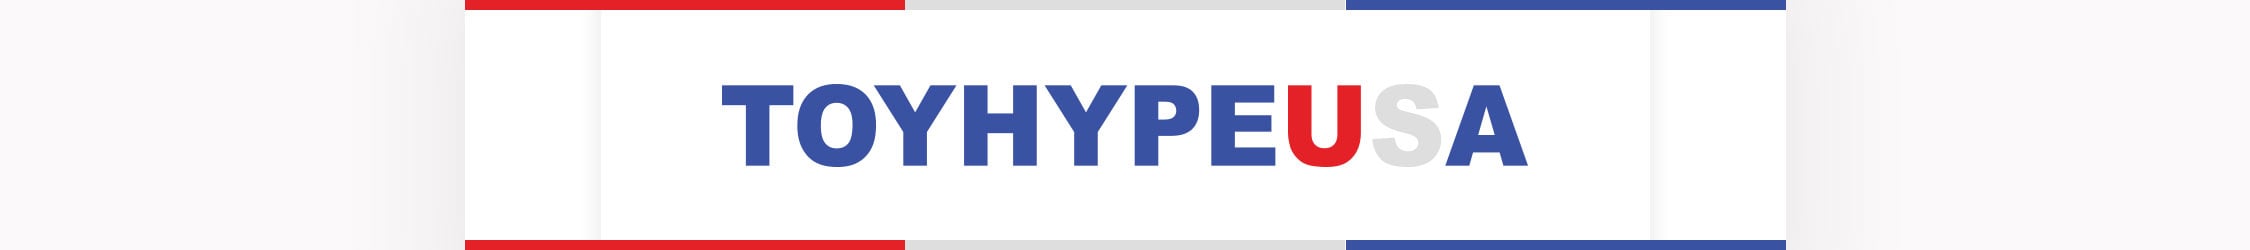 ToyHype